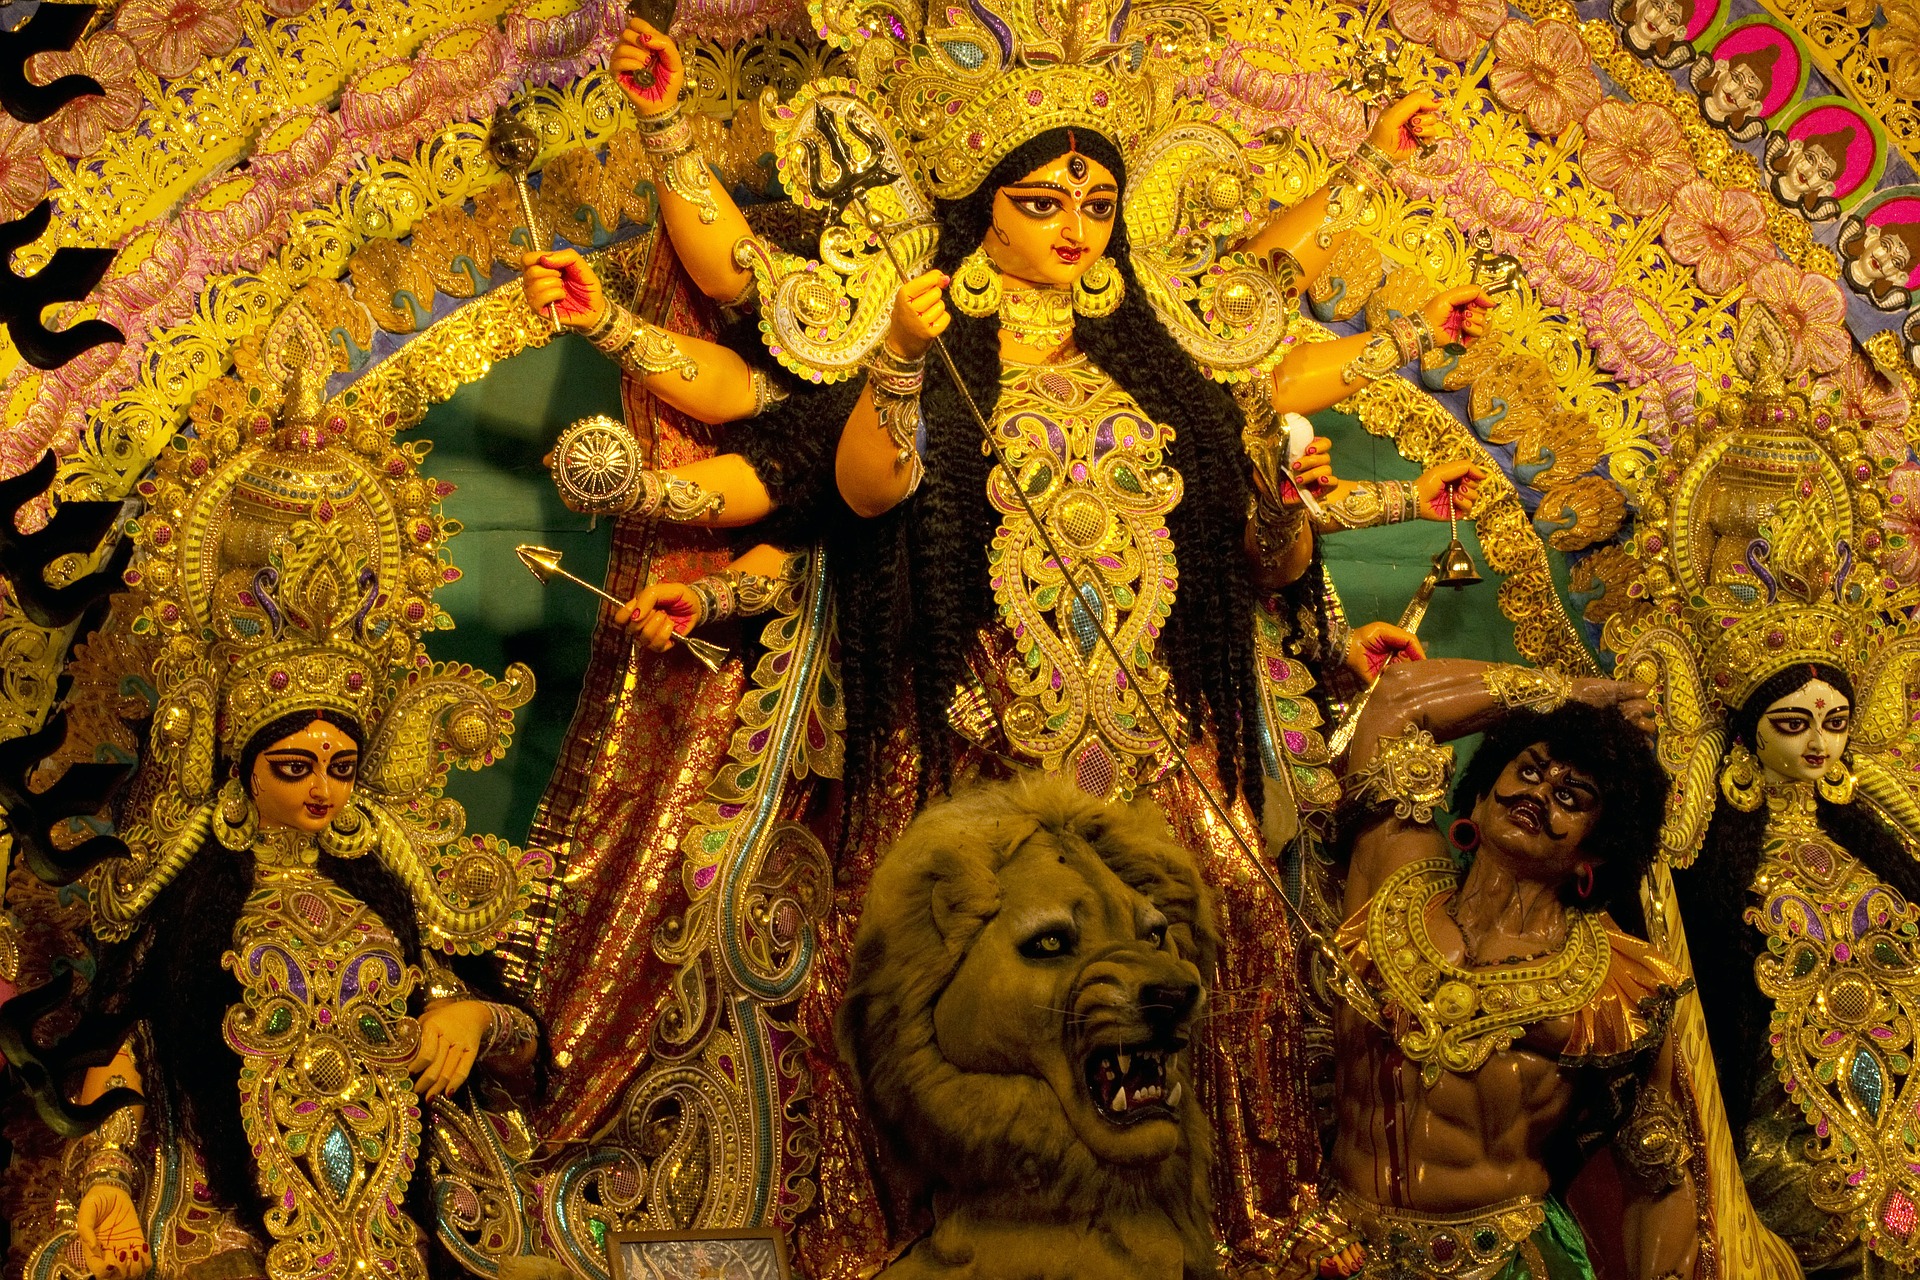 An idol of Mother Goddess Durga on a roaring lion